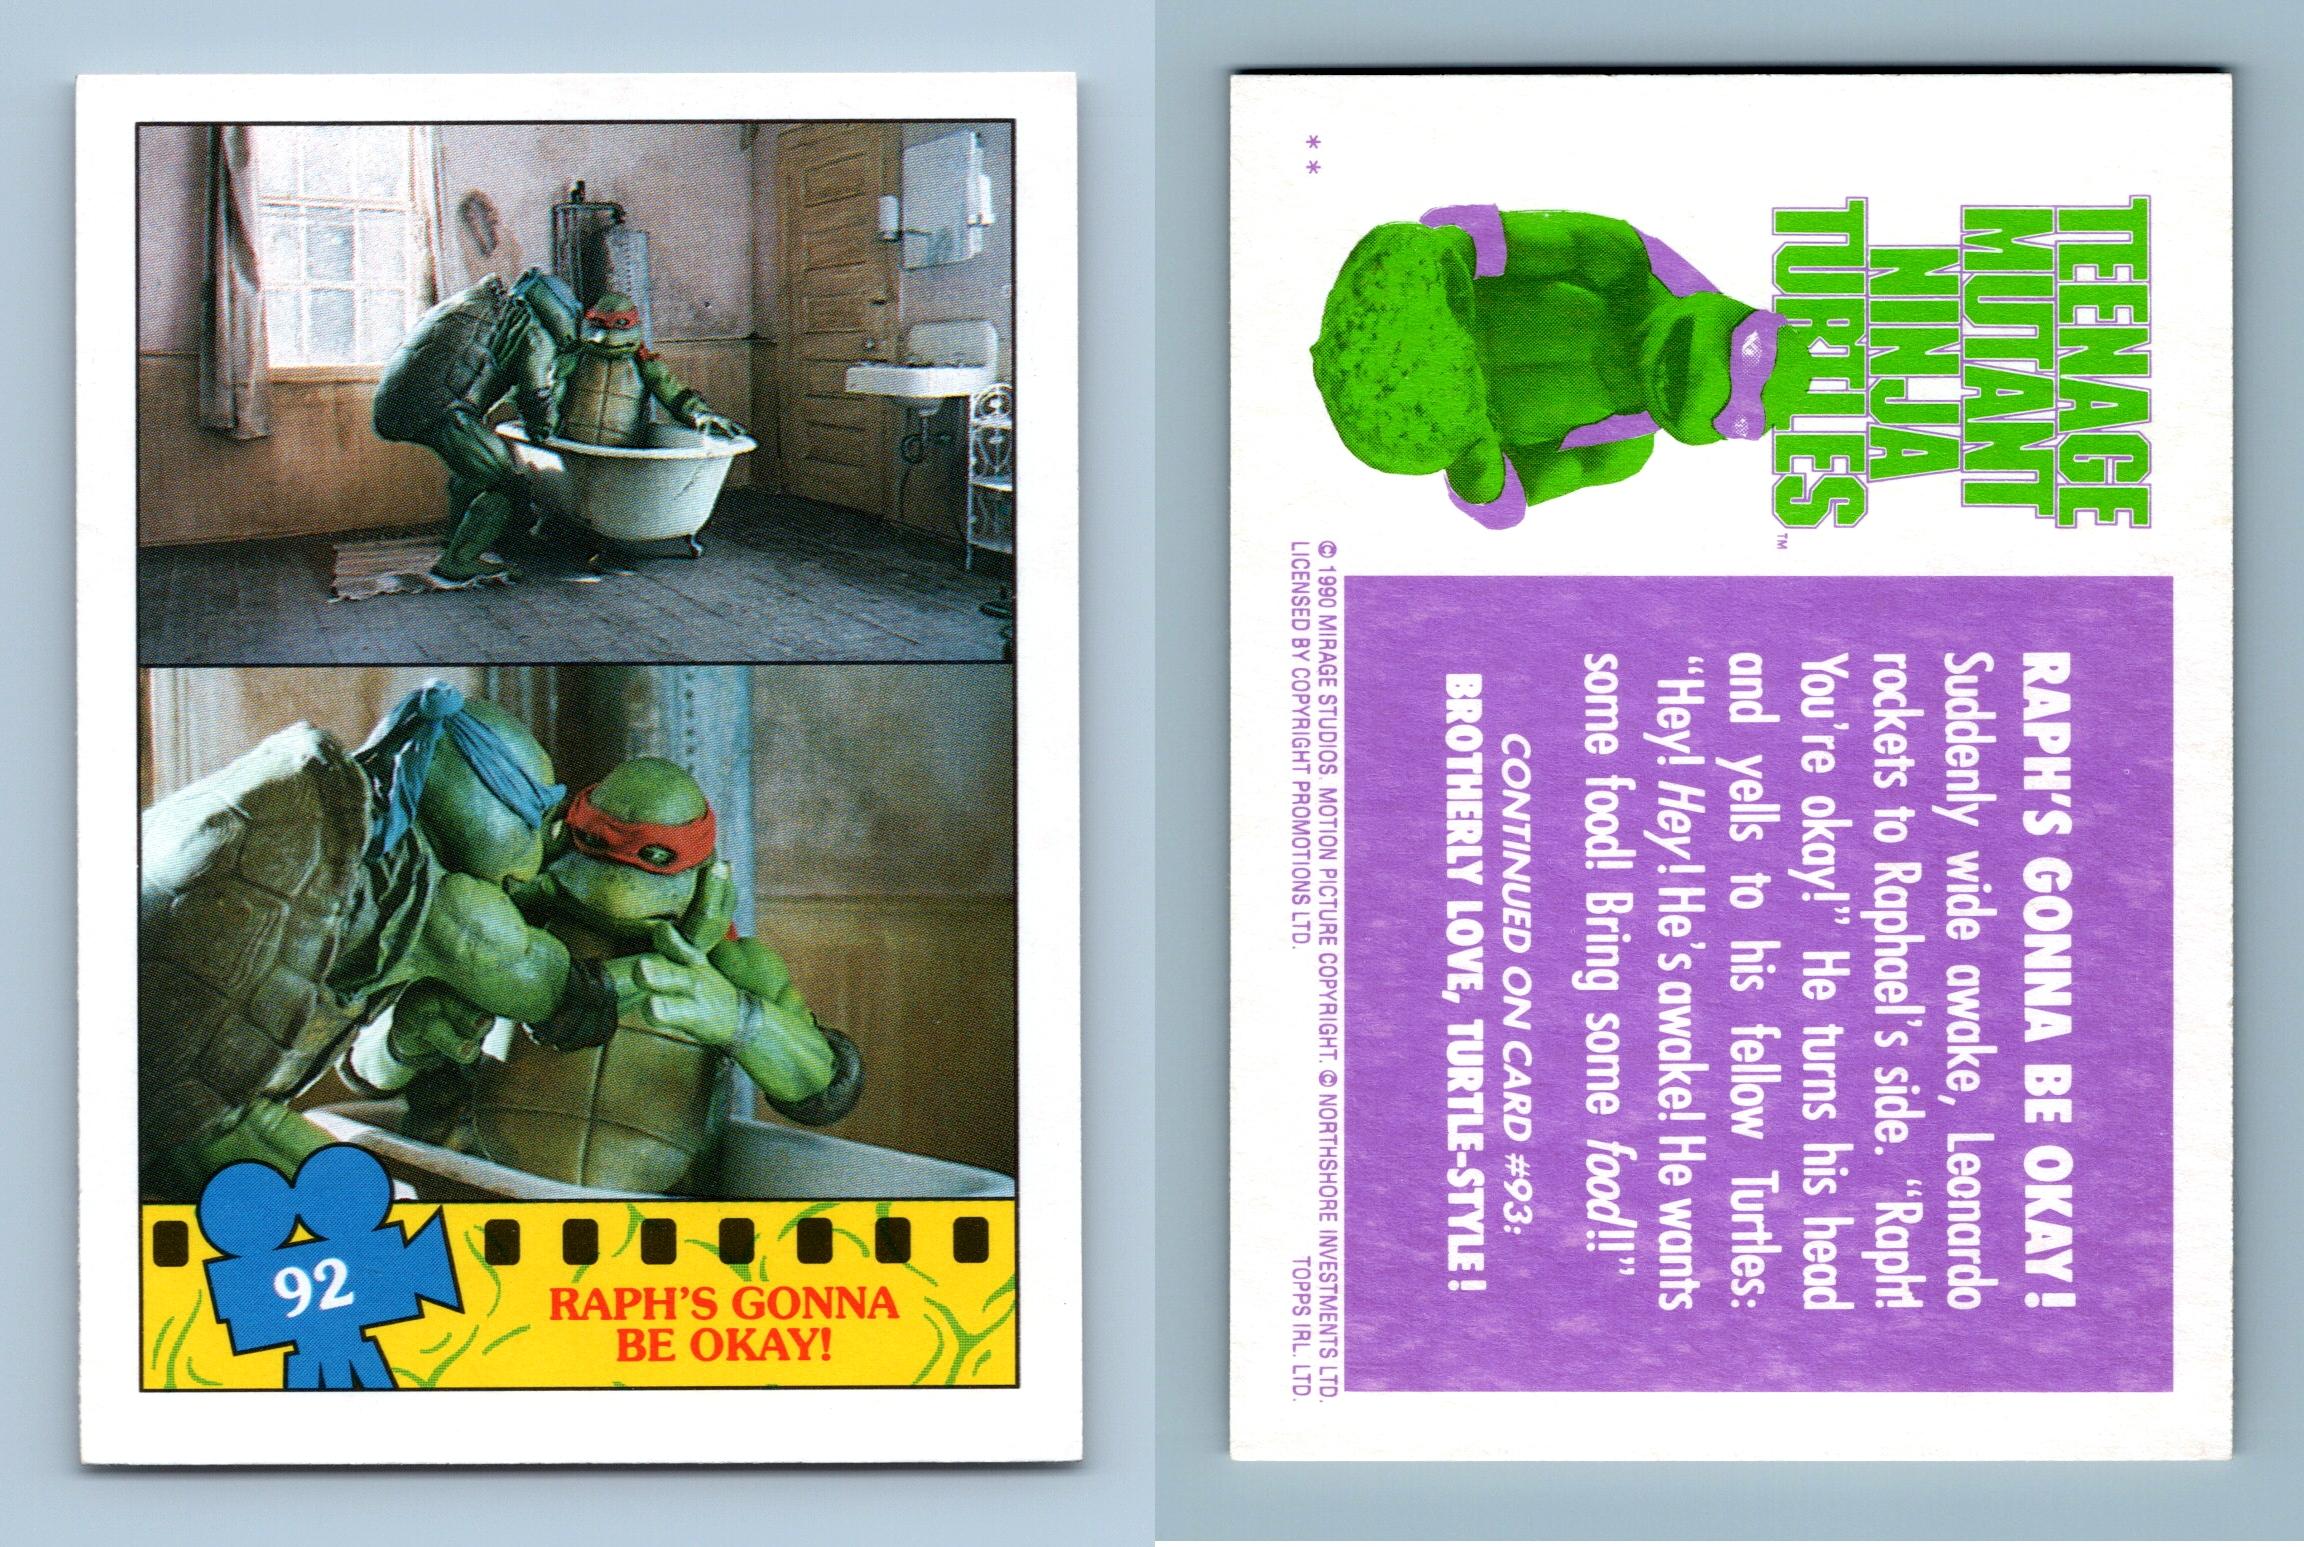 Raph OK #92 Teenage Mutant Ninja Turtles : The Movie 1990 Topps Trading Card - Picture 1 of 1